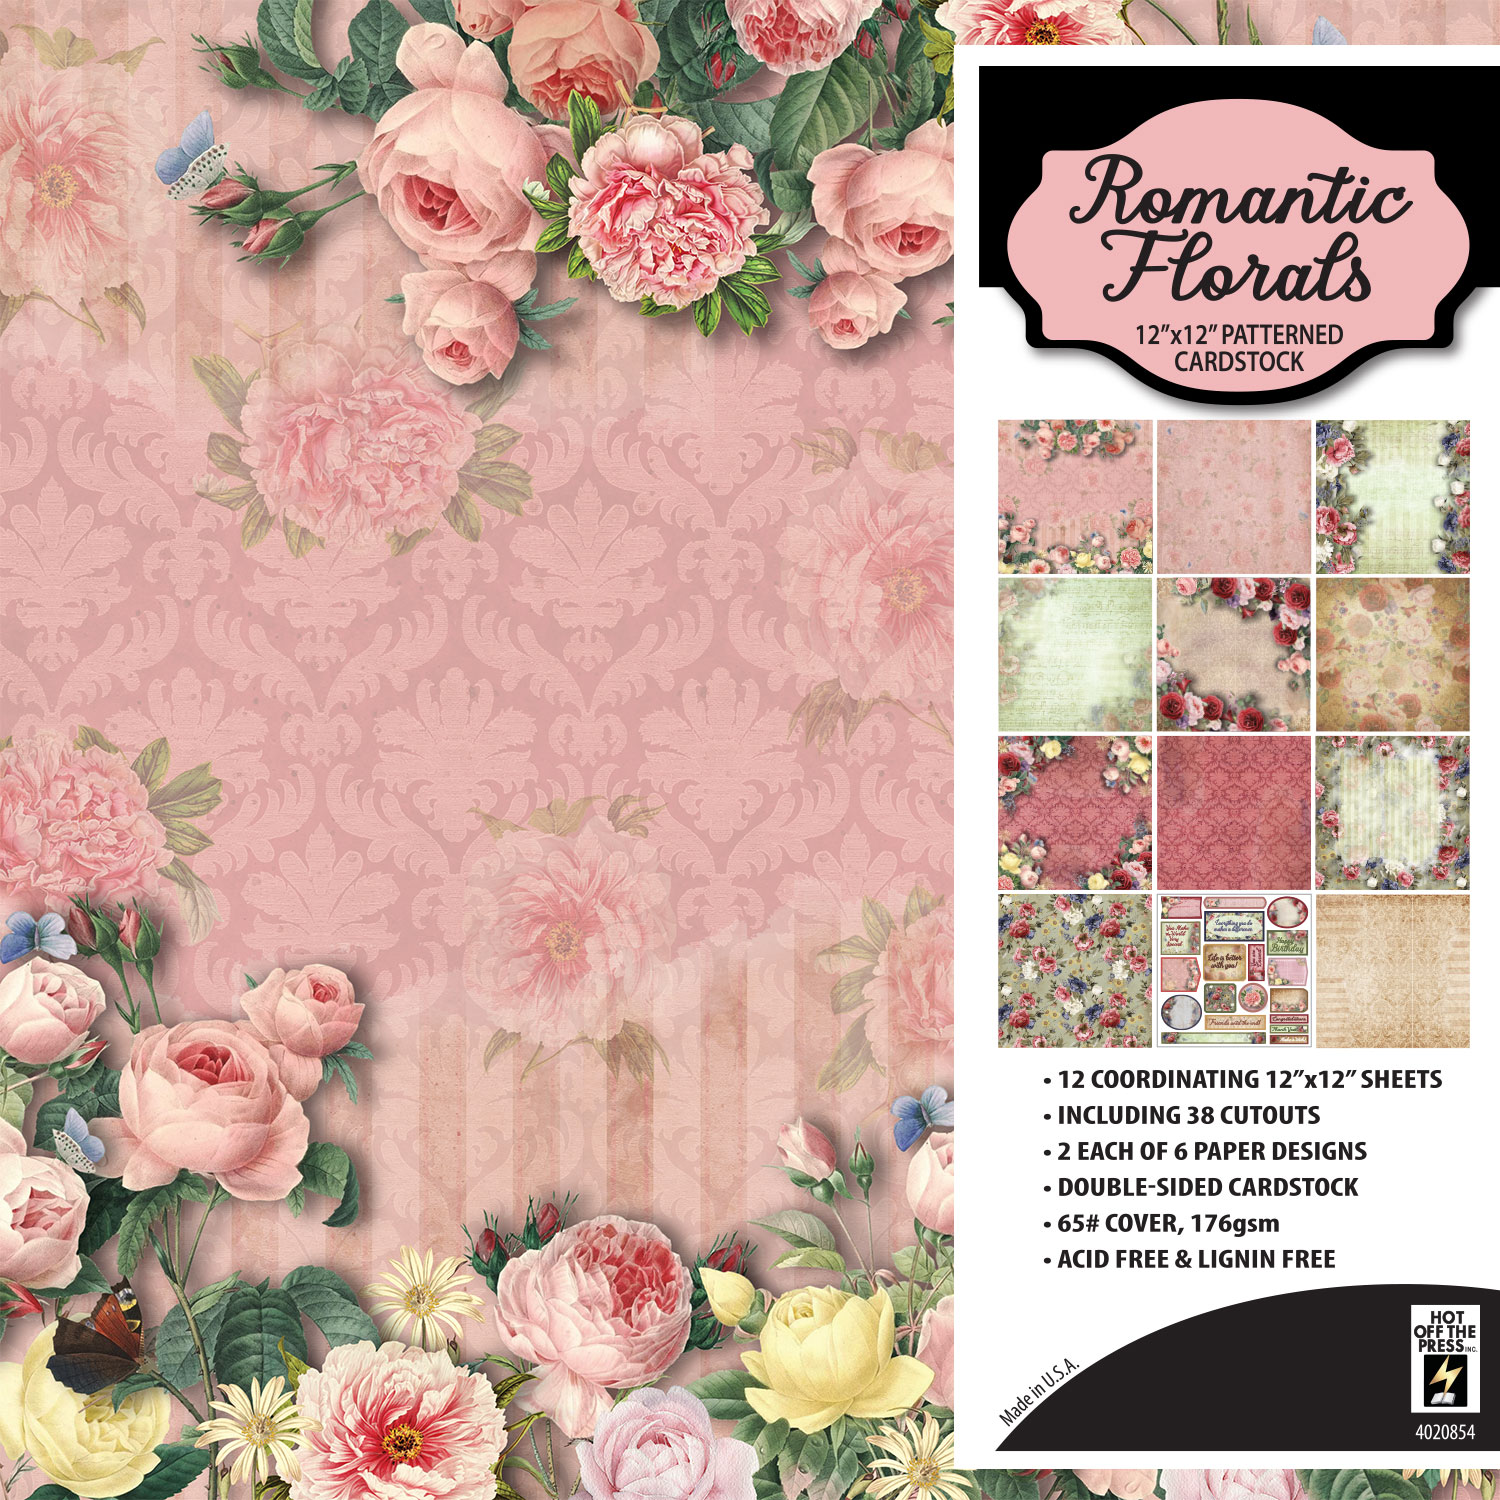 Romantic Florals 12x12 Patterned Cardstock